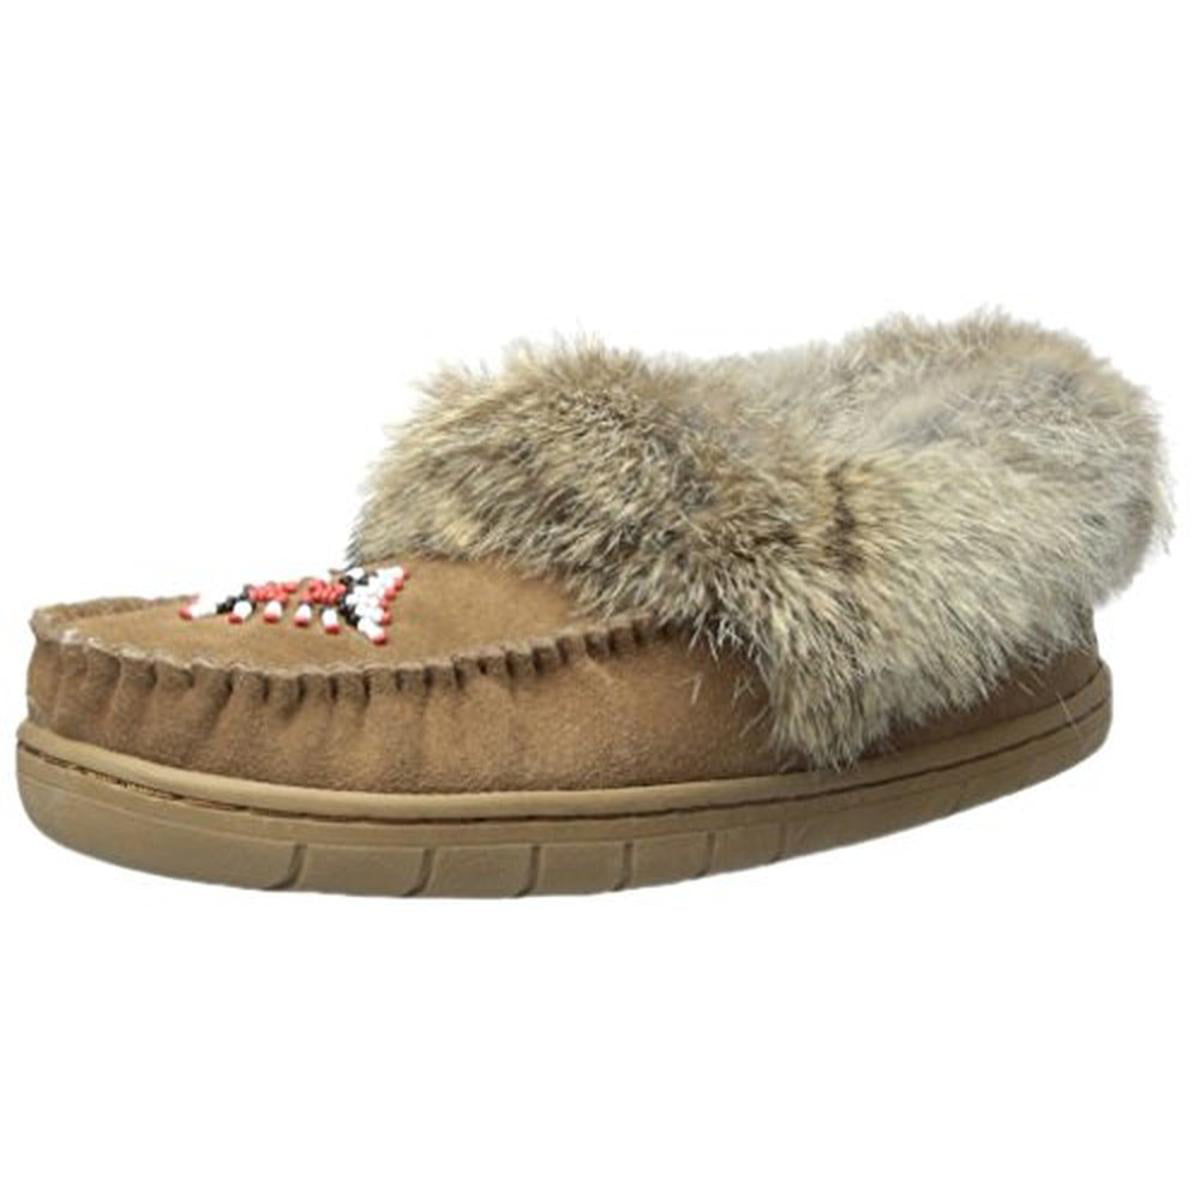 walmart slippers